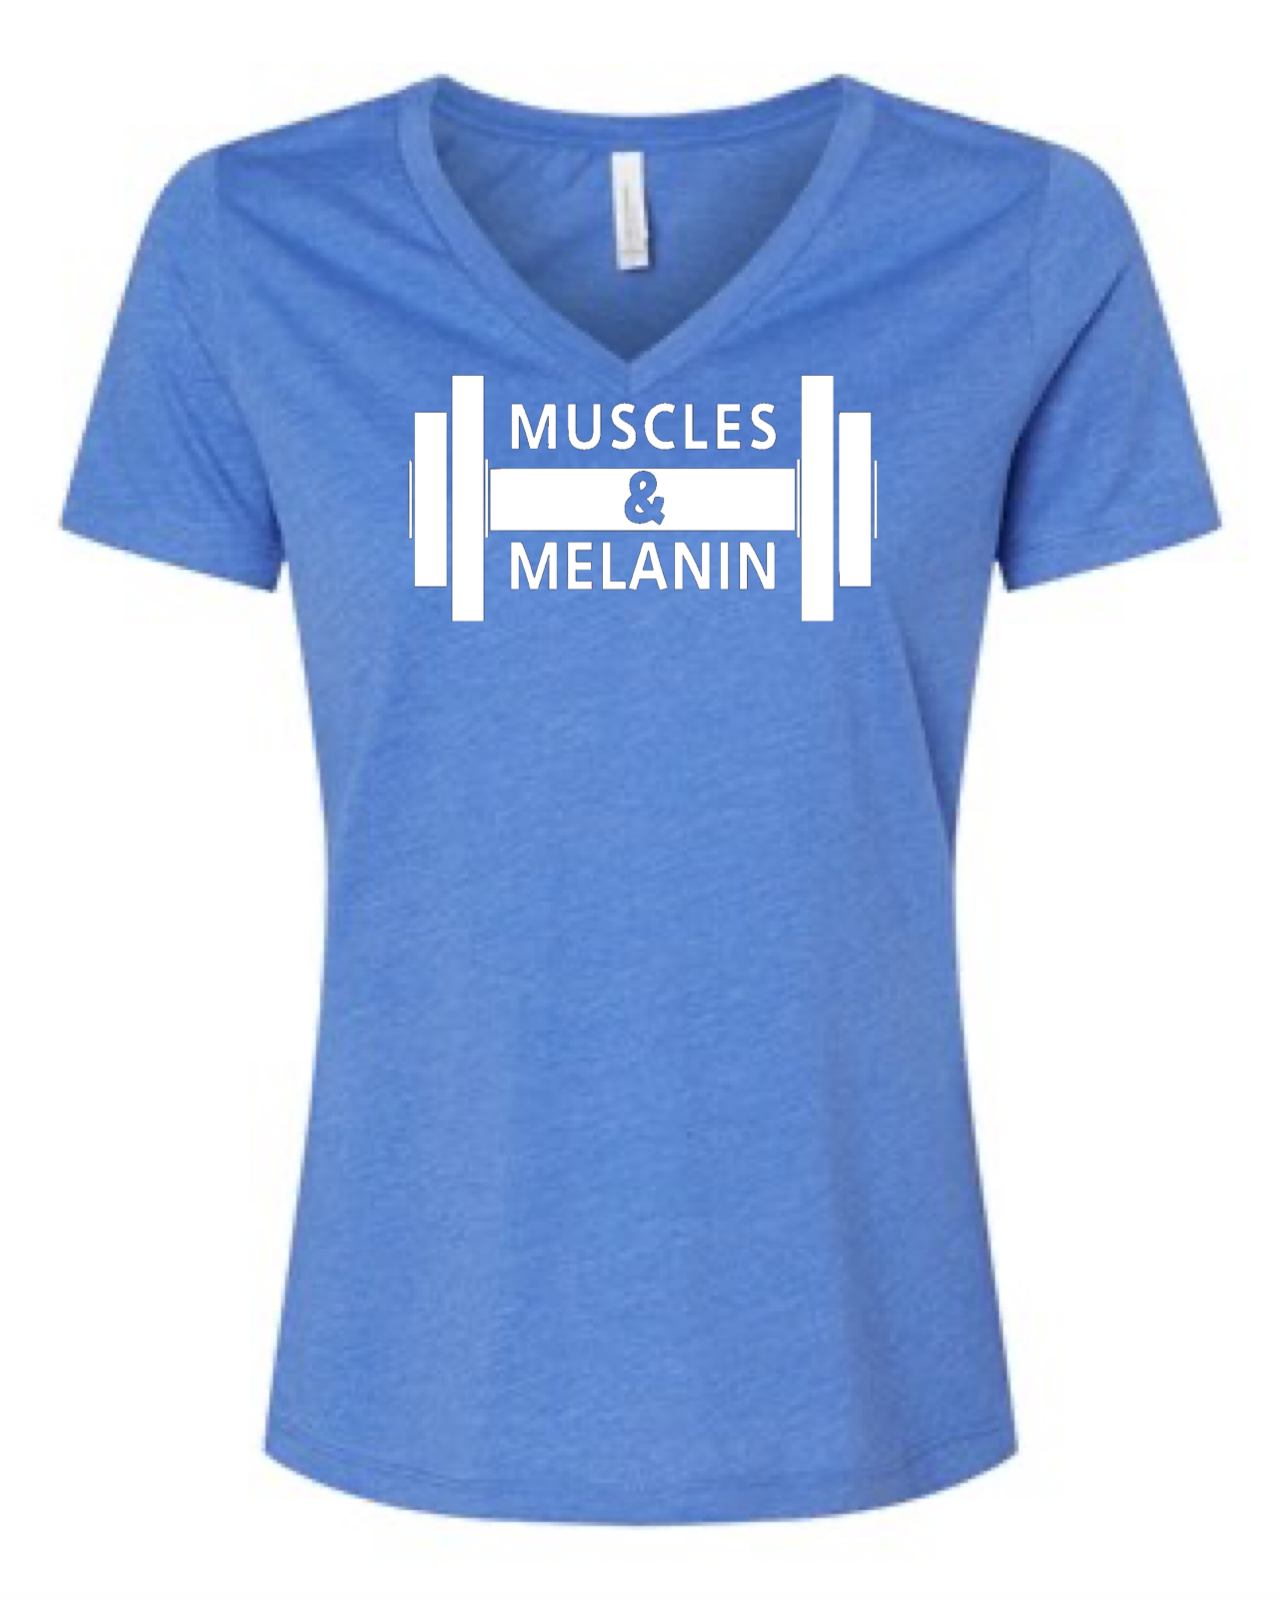 Muscles & Melanin Tri- Blend V-Neck T-Shirt